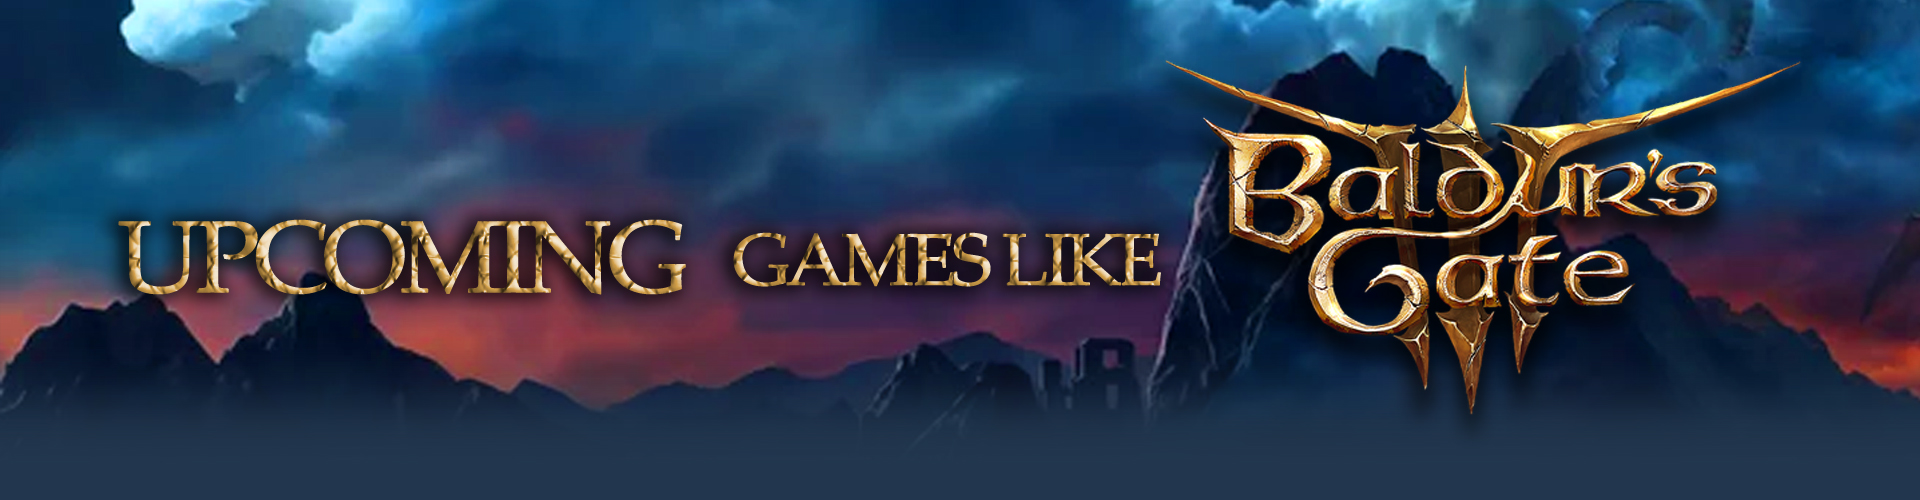 Upcoming games like Baldur's Gate 3